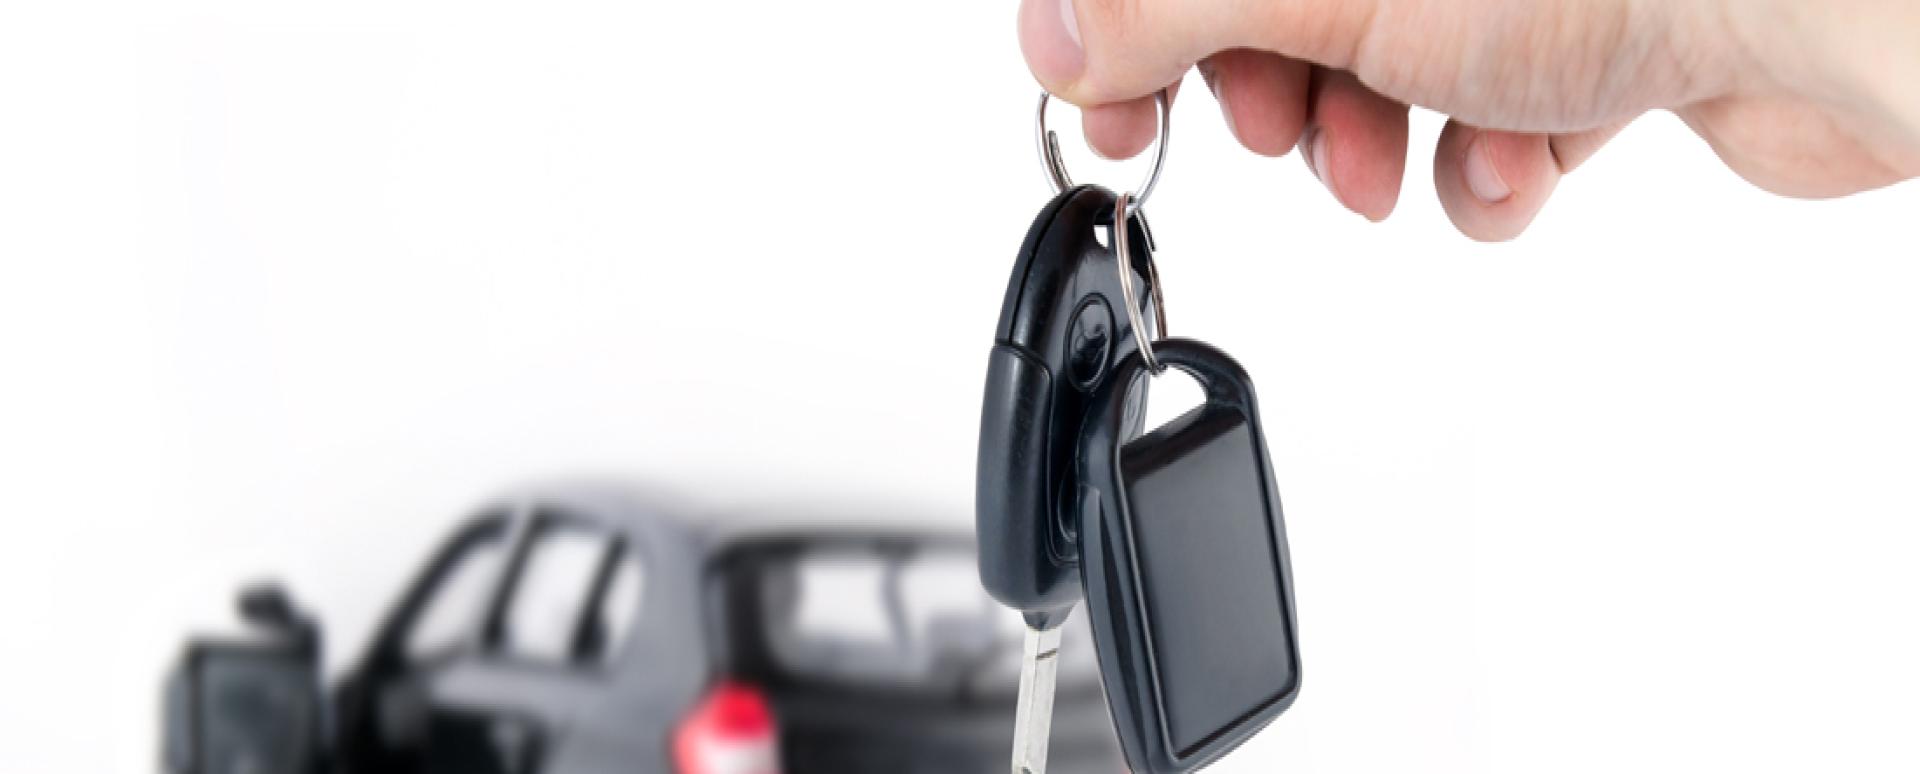 Mercedes Key Replacement: Repair, Lost or New